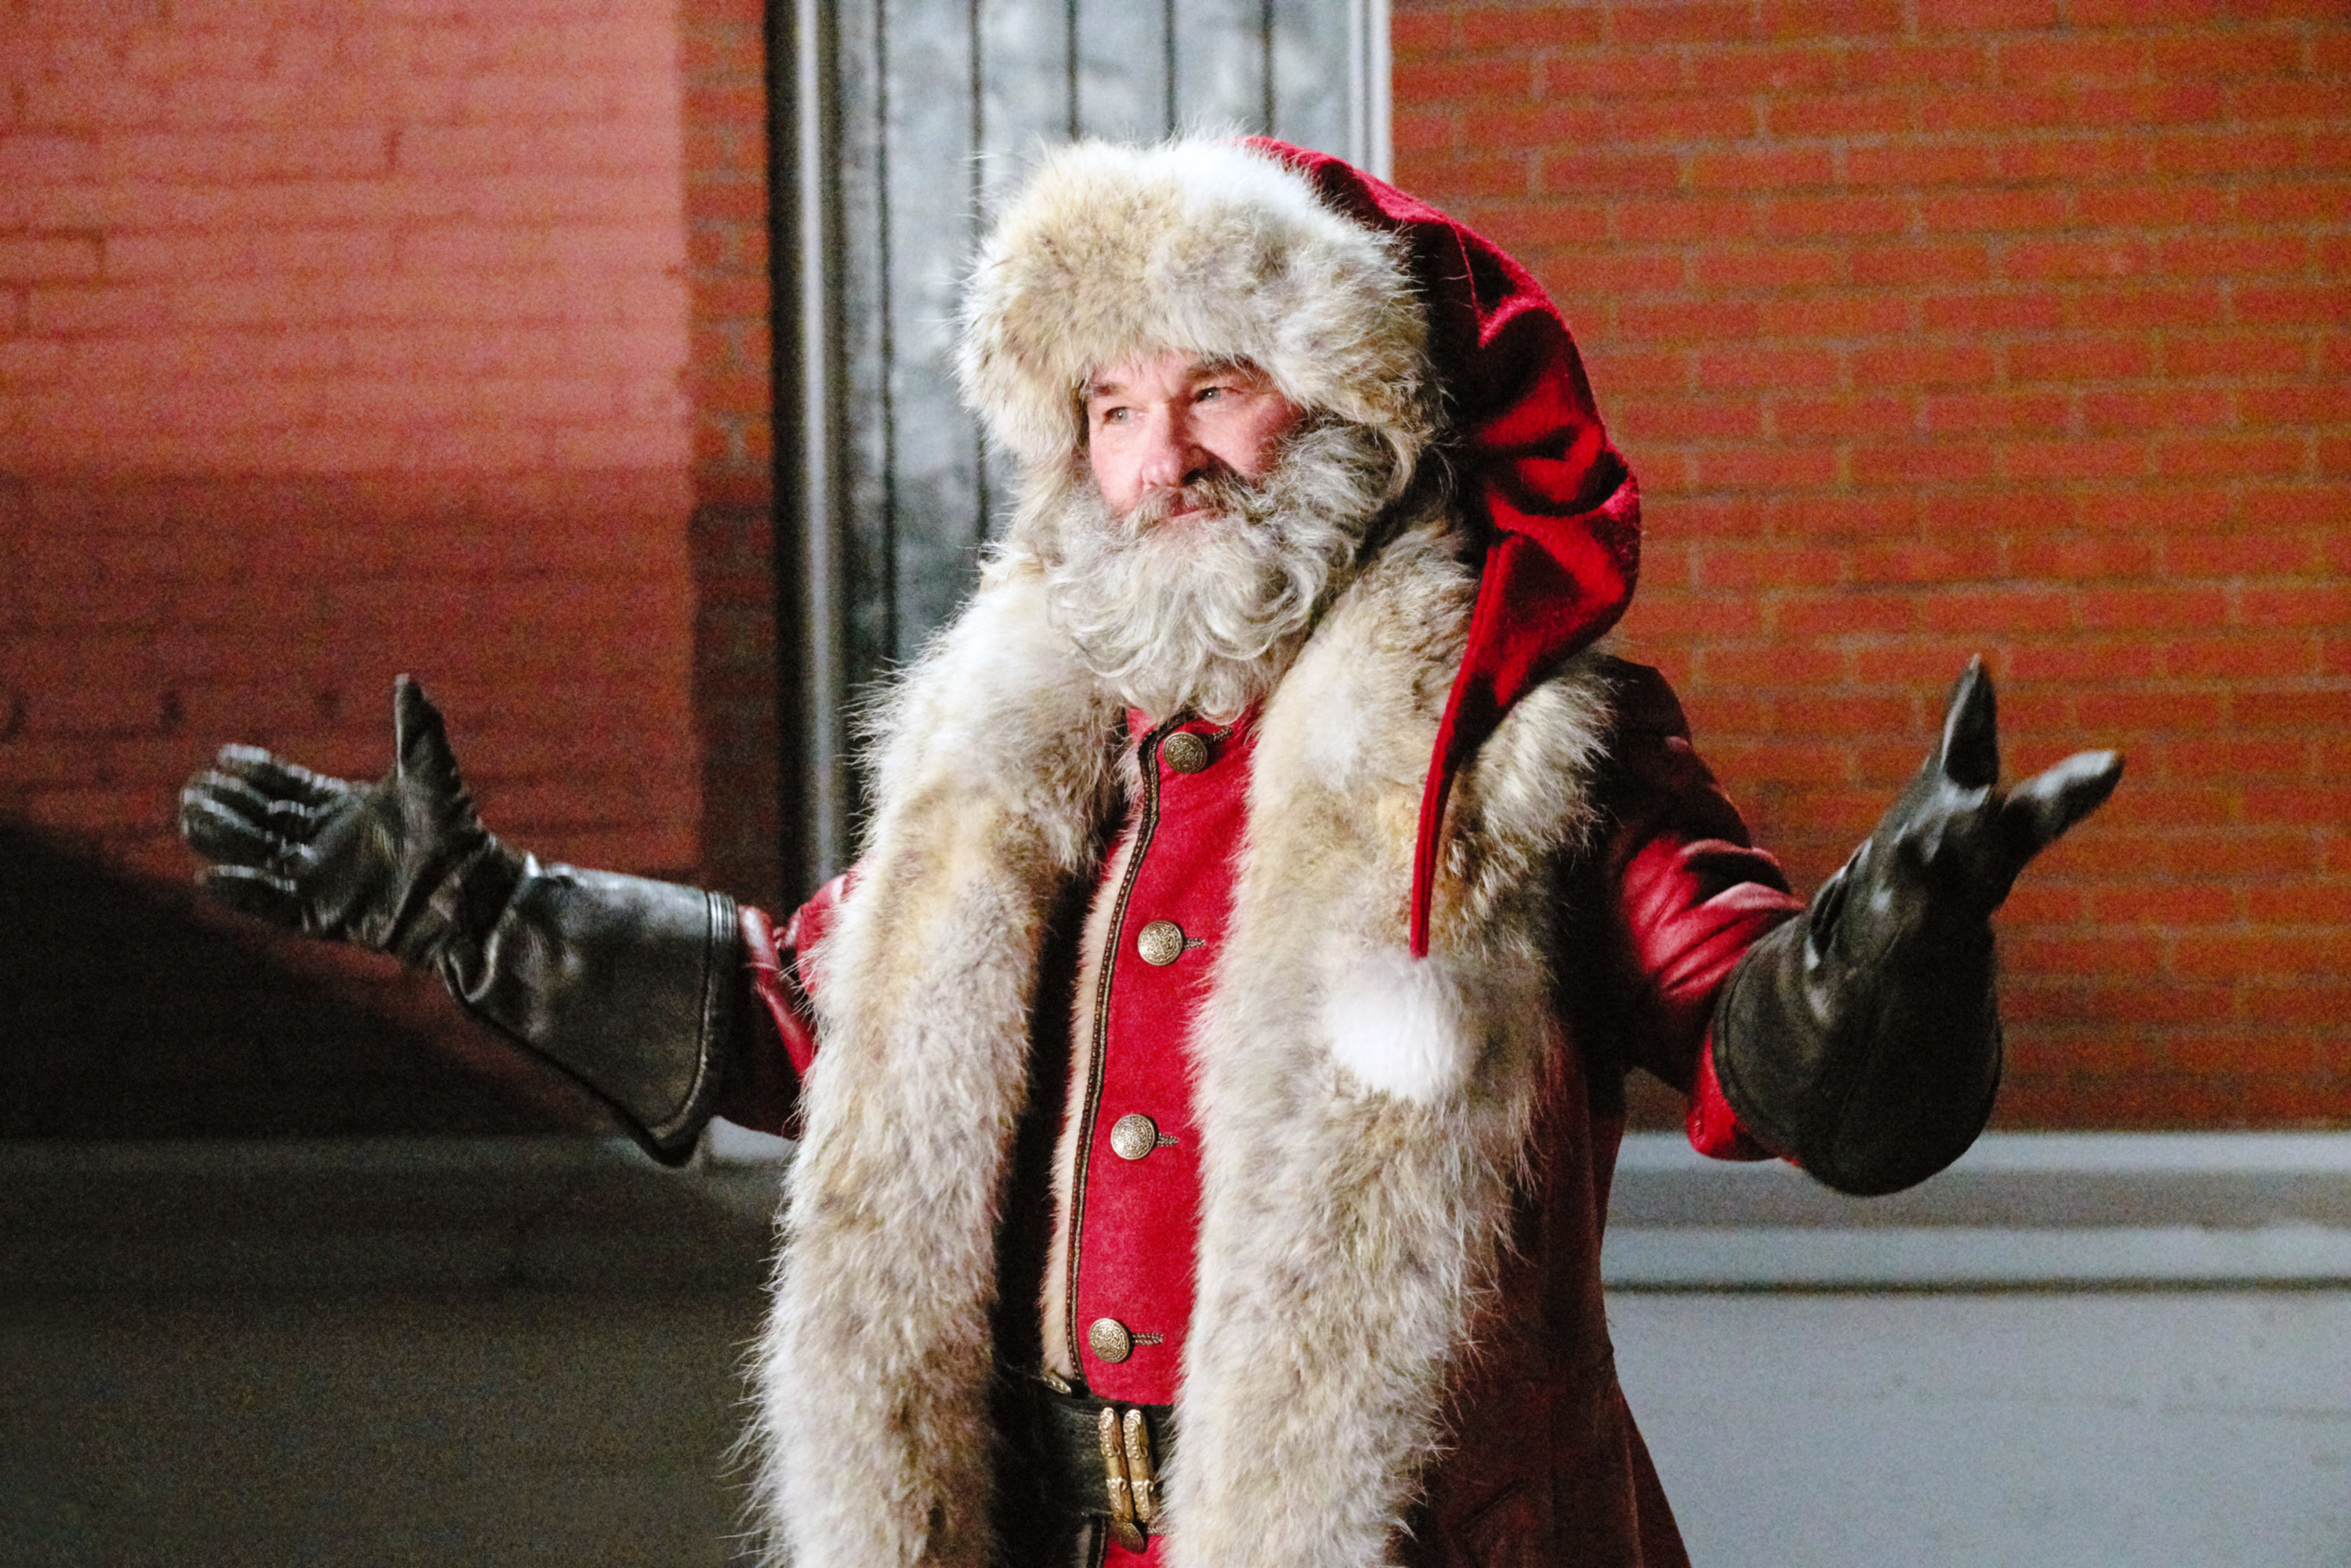 Kurt Russell dressed as Santa.